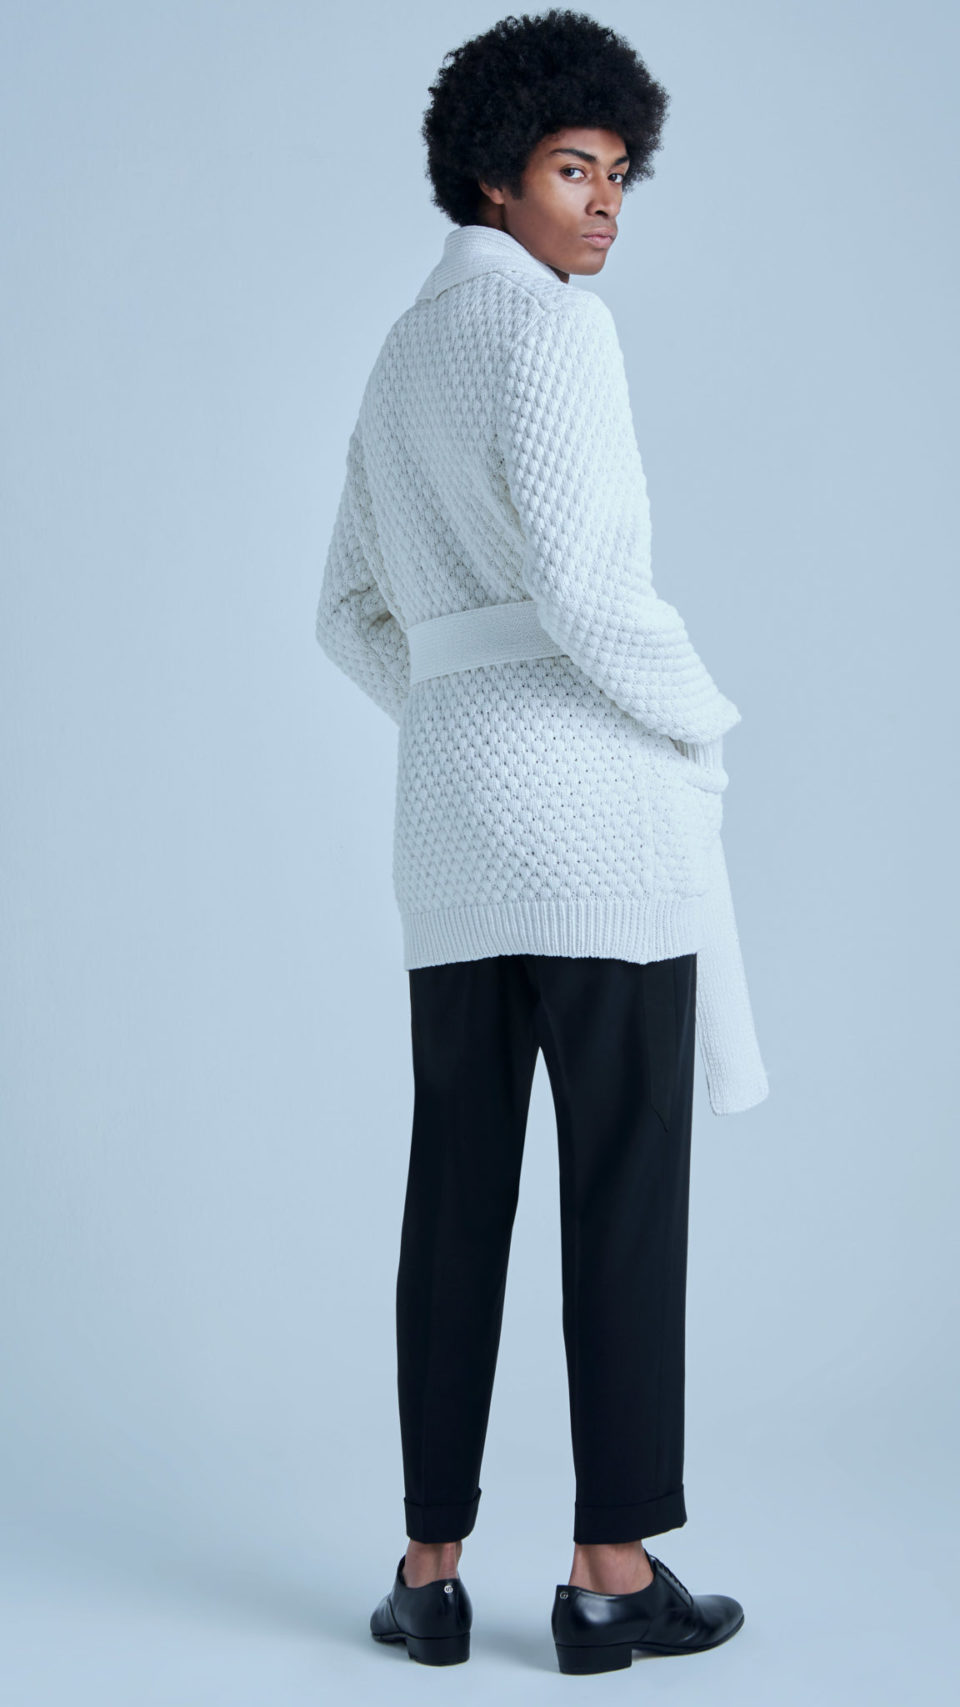 Cotton knit cardigan in white, MAR by Maria Karimi